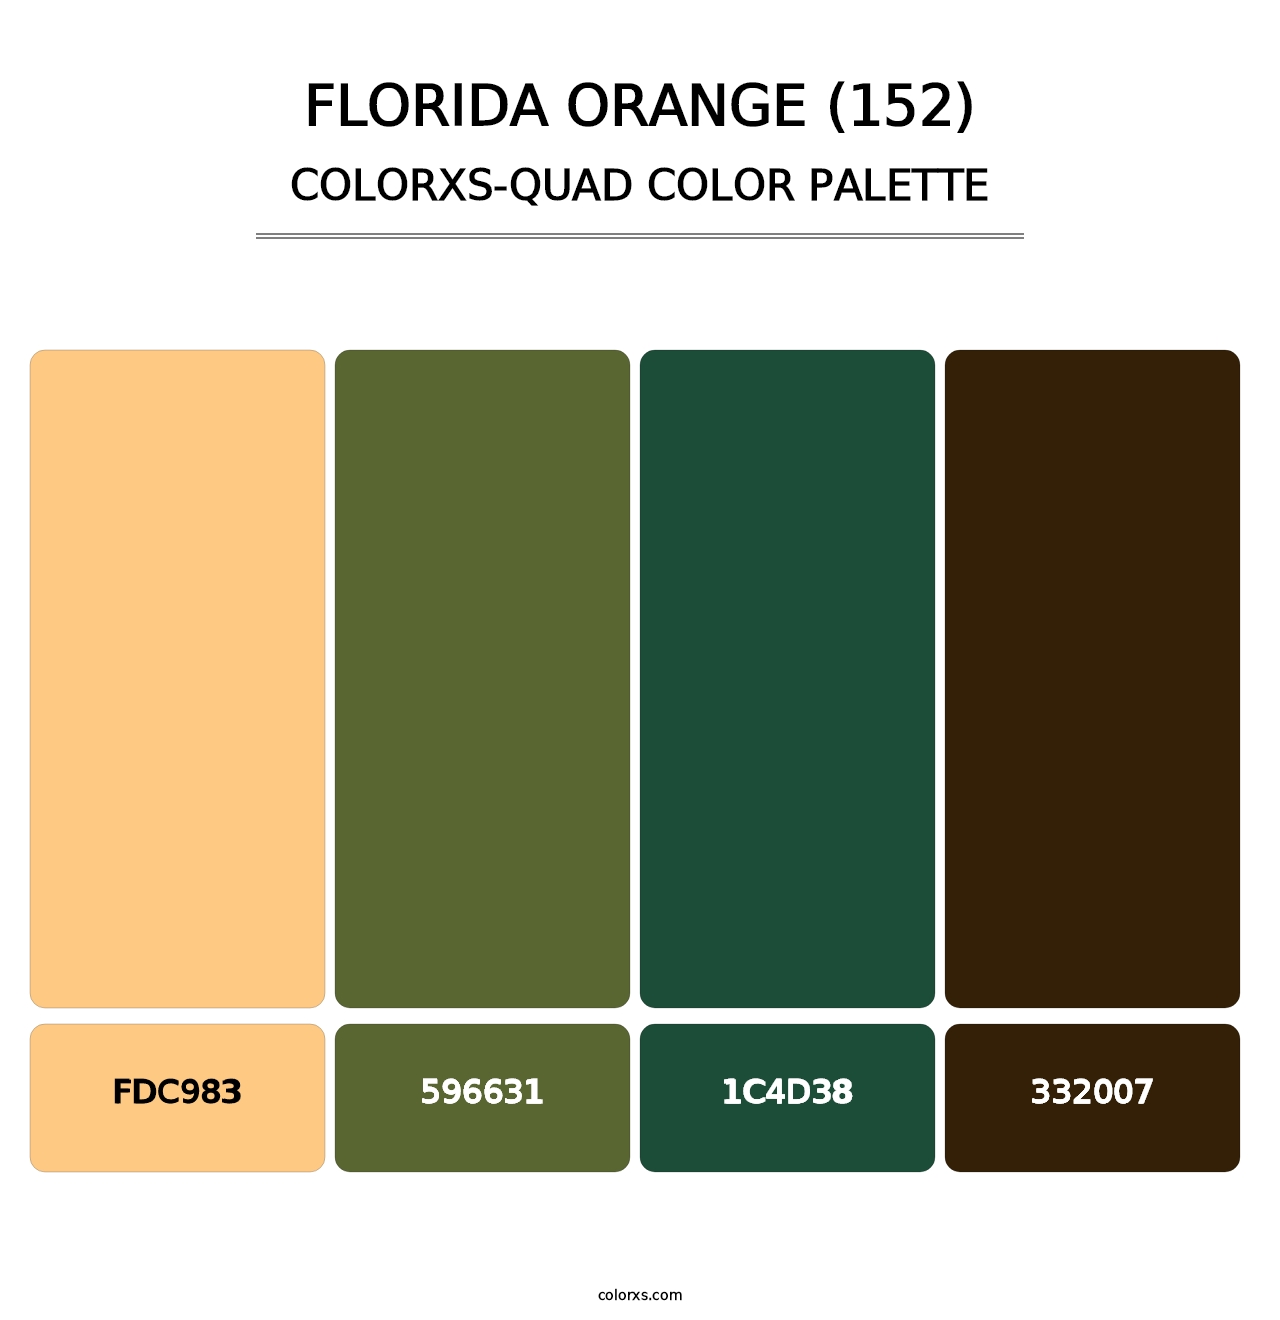 Florida Orange (152) - Colorxs Quad Palette